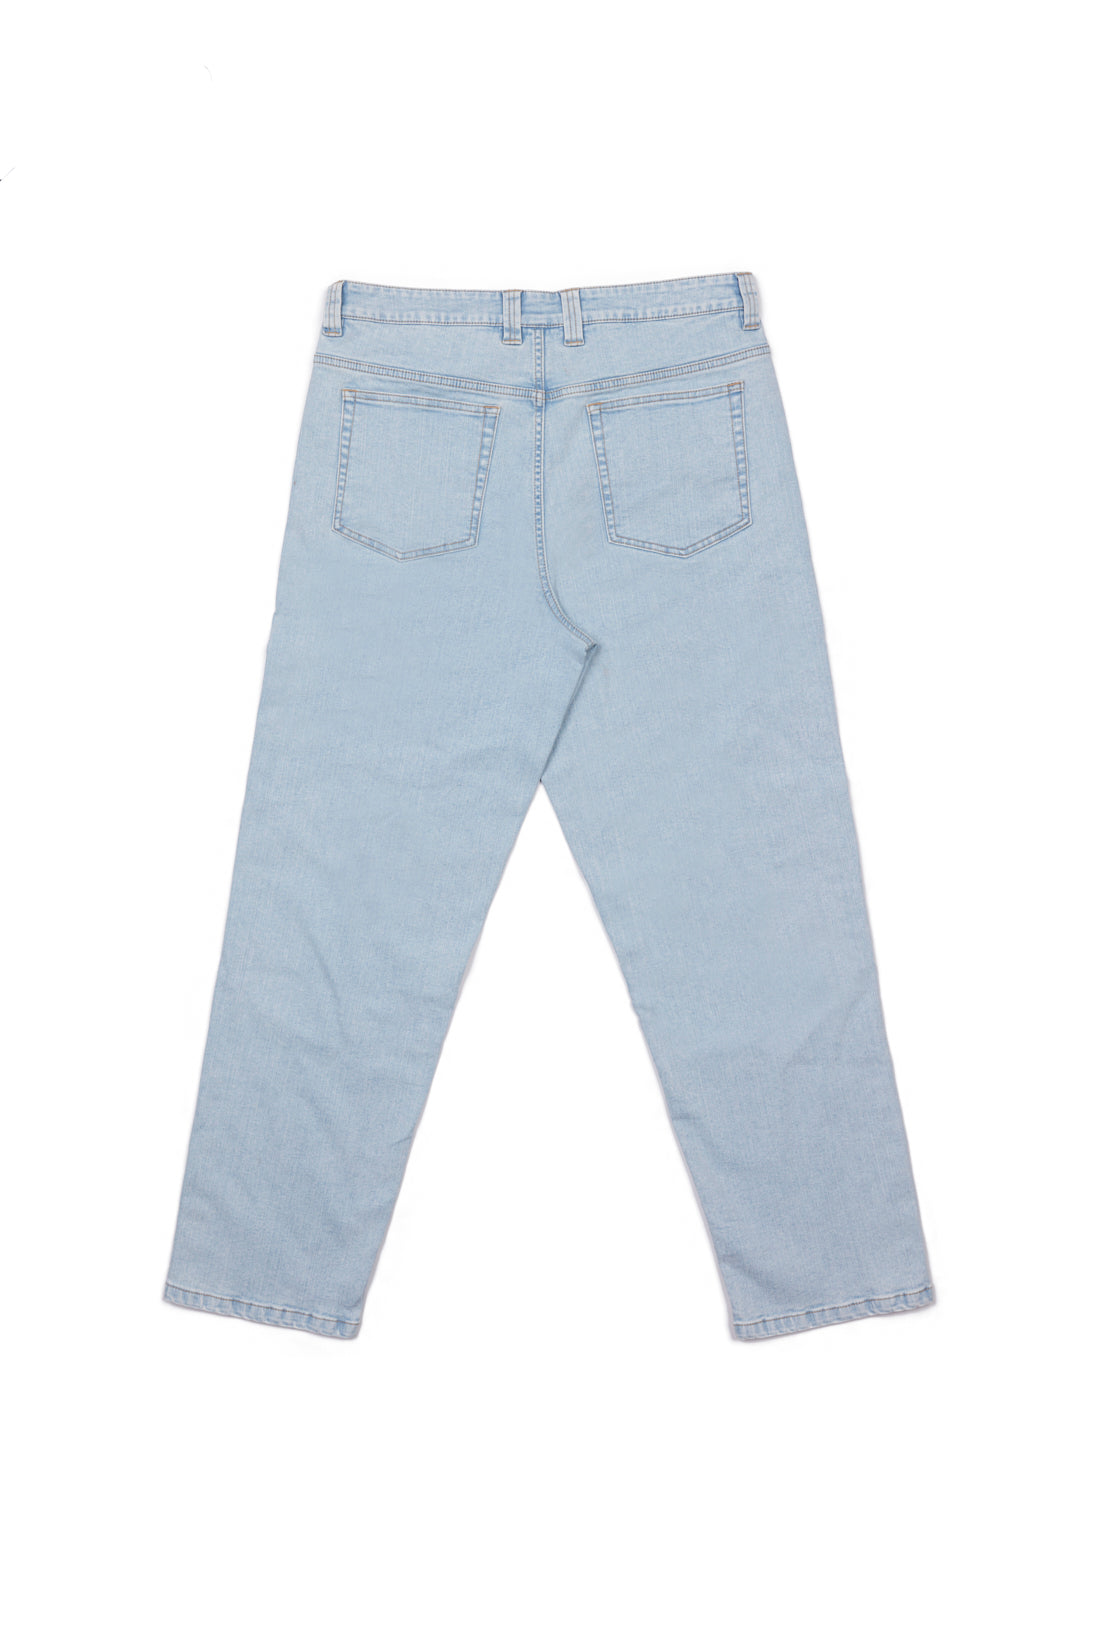 Vision Street Wear Boychik 5 Pocket Pant in Stretch Raw Denim Light Blue